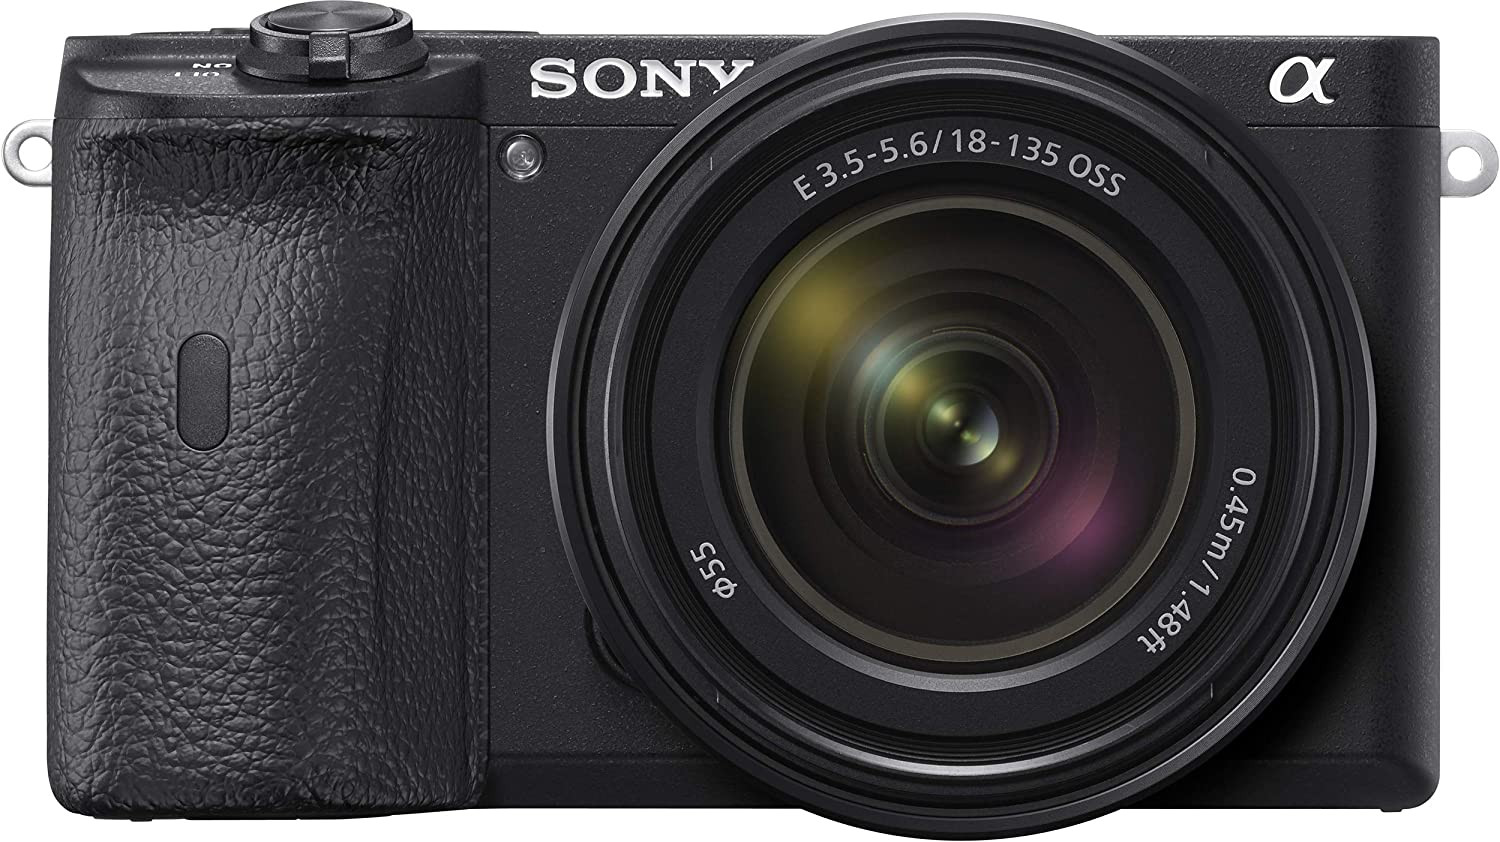 Sony A6600 Kit (18-135mm f/3.5-5.6 OSS) Black